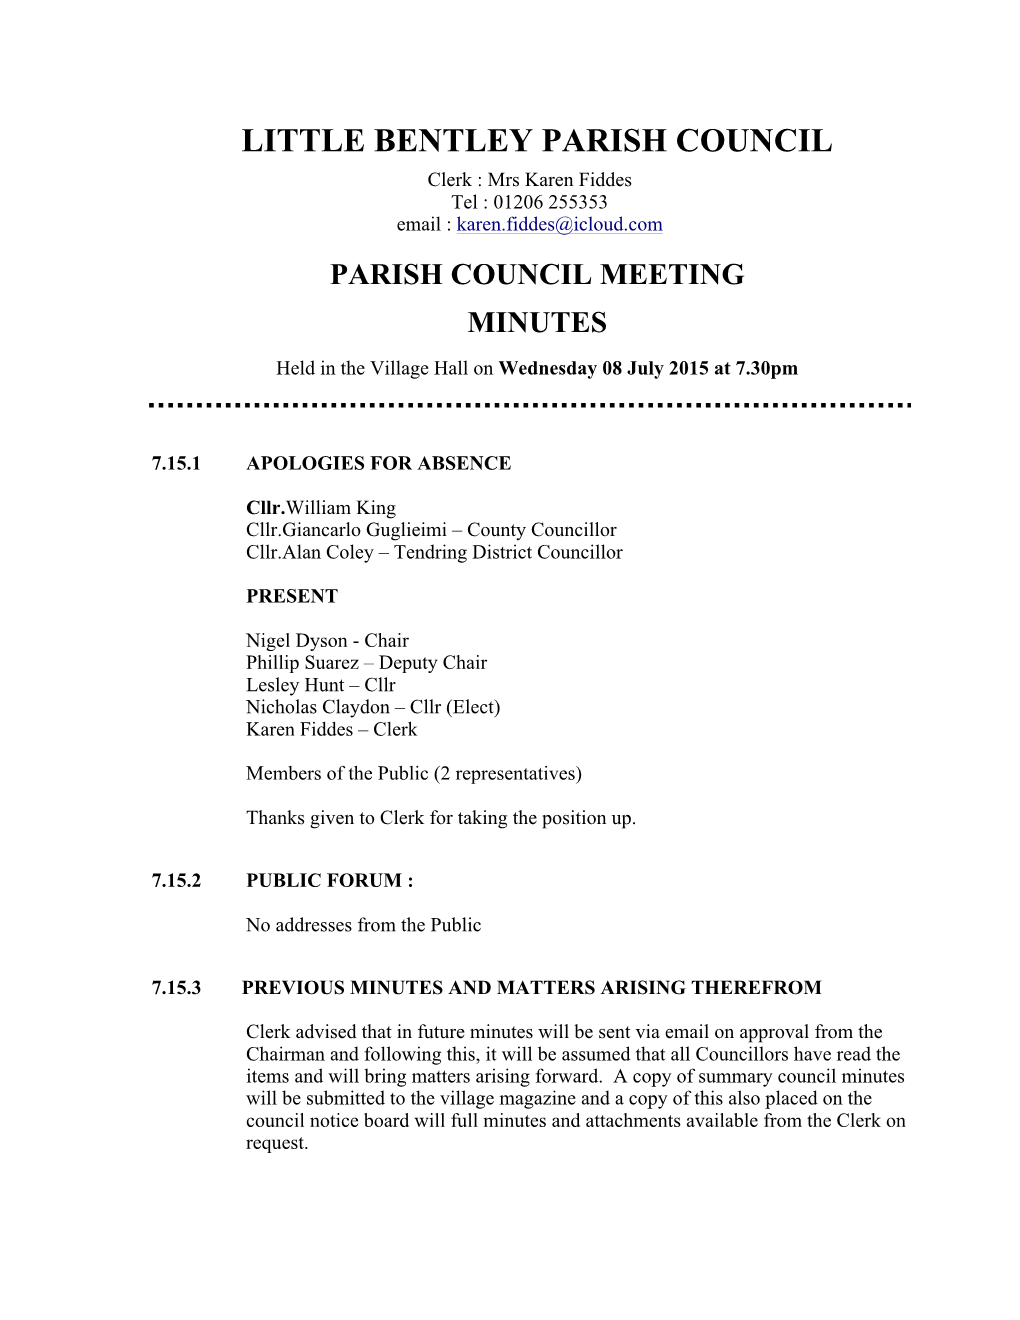 Parish Council Meeting Minutes